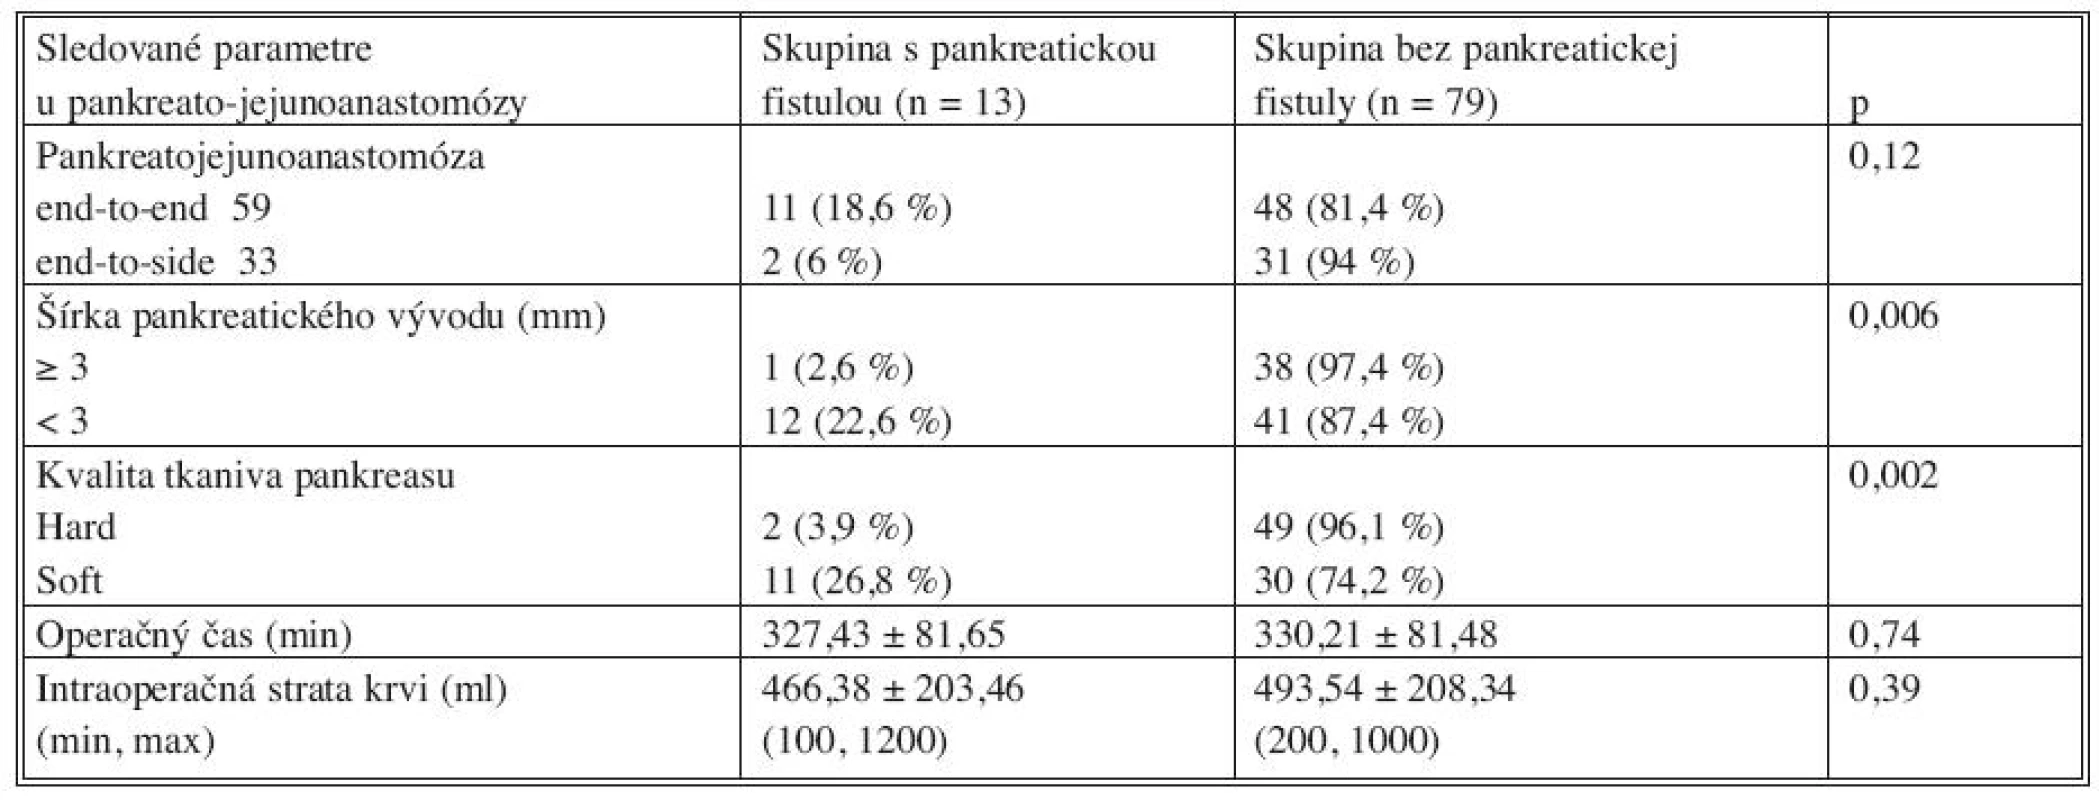 Peroperačné rizikové faktory vzniku pankreatickej fistuly
Tab. 7. Intraoperative risk factors for pancreatic leakage